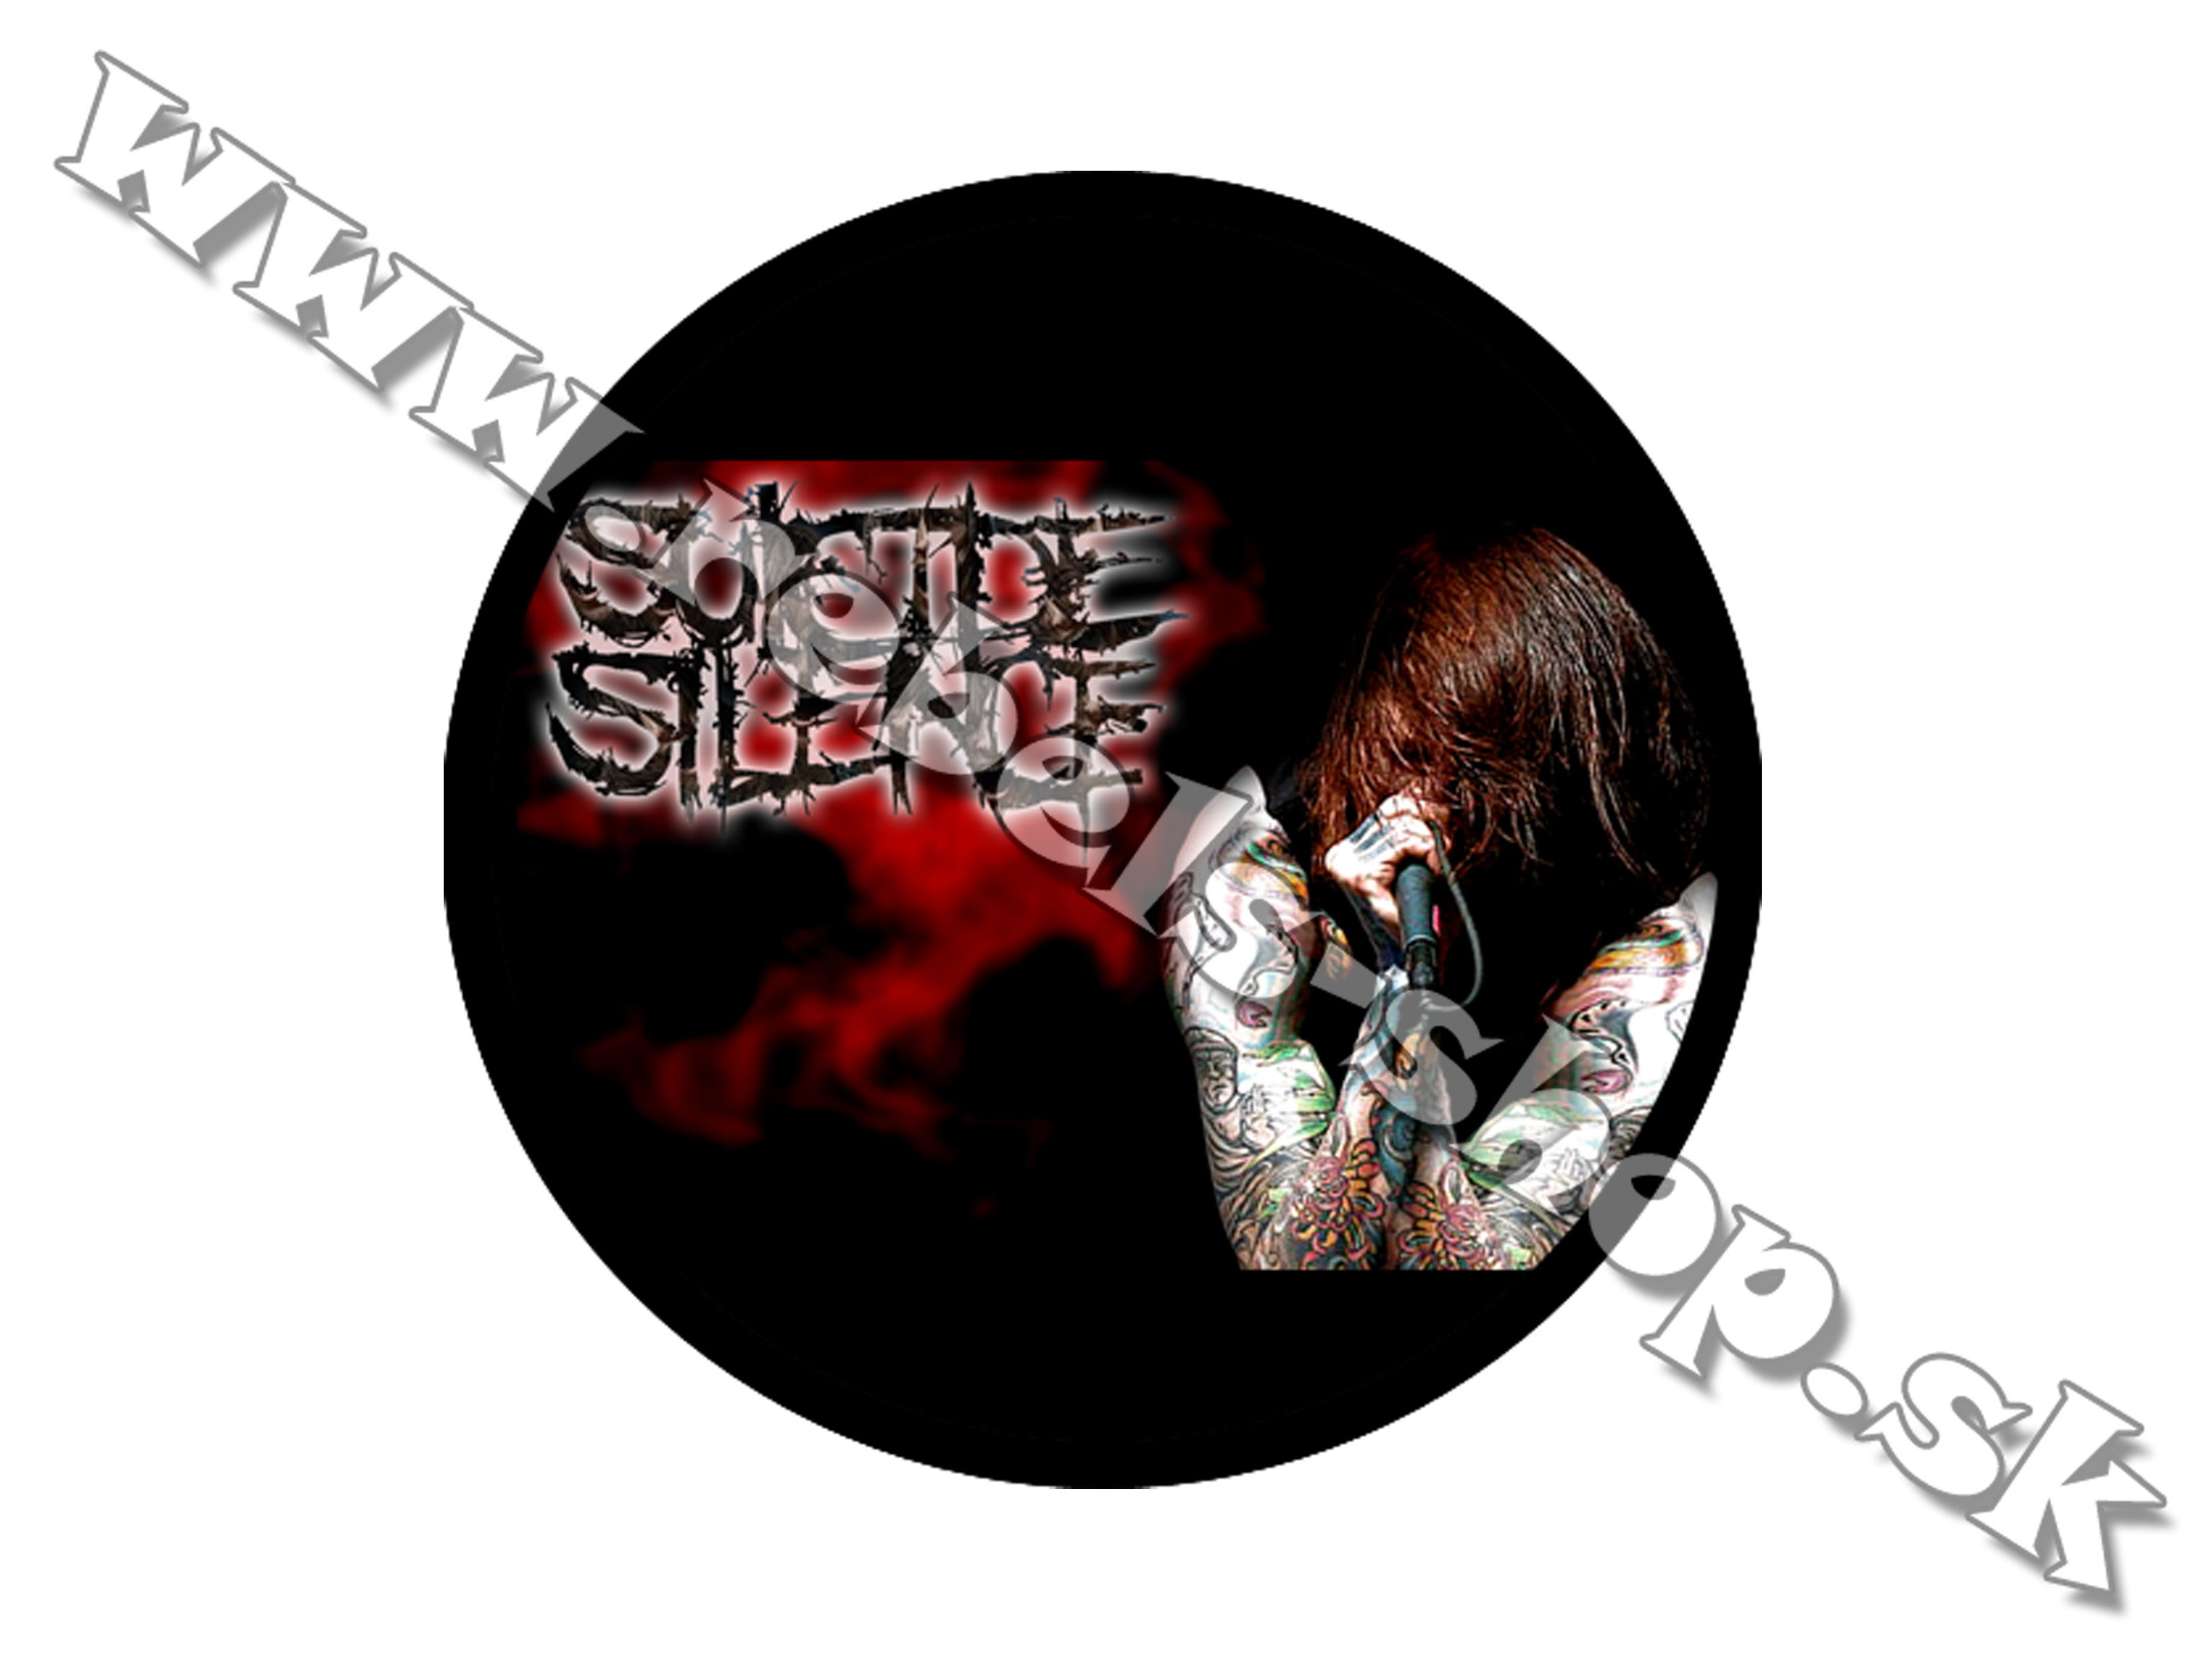 Odznak "Suicide Silence"